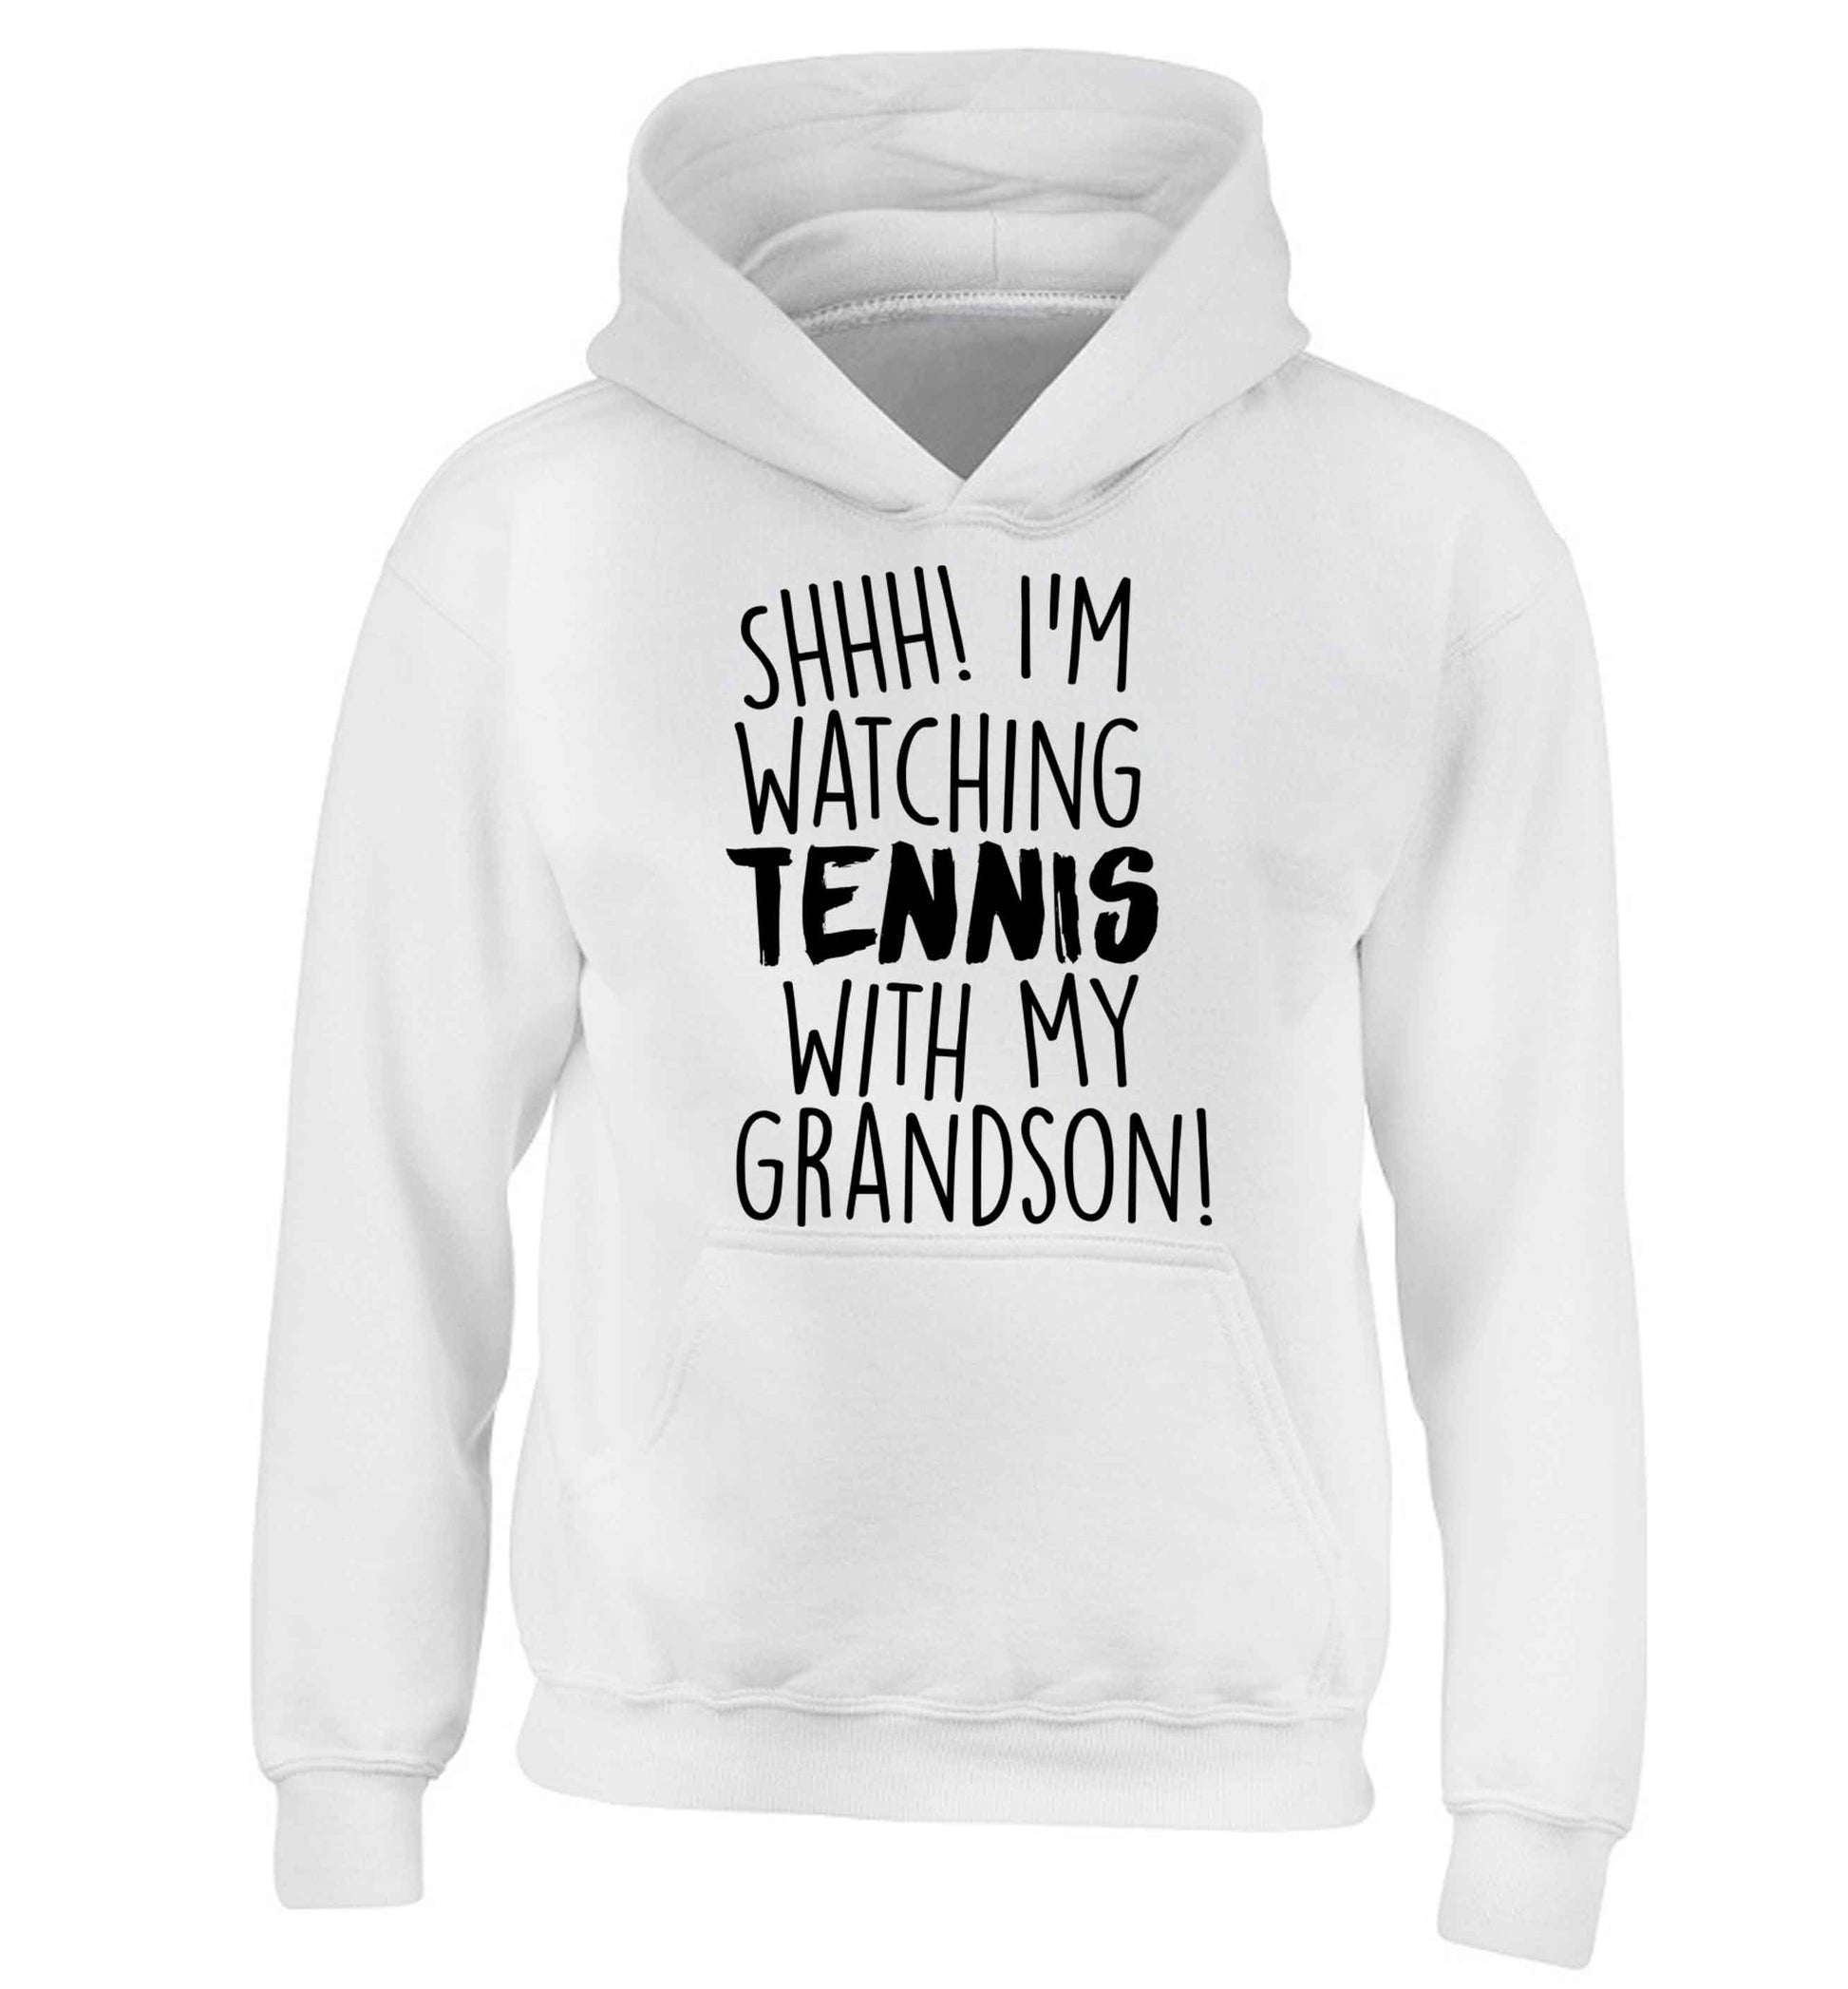 Shh! I'm watching tennis with my grandson! children's white hoodie 12-13 Years